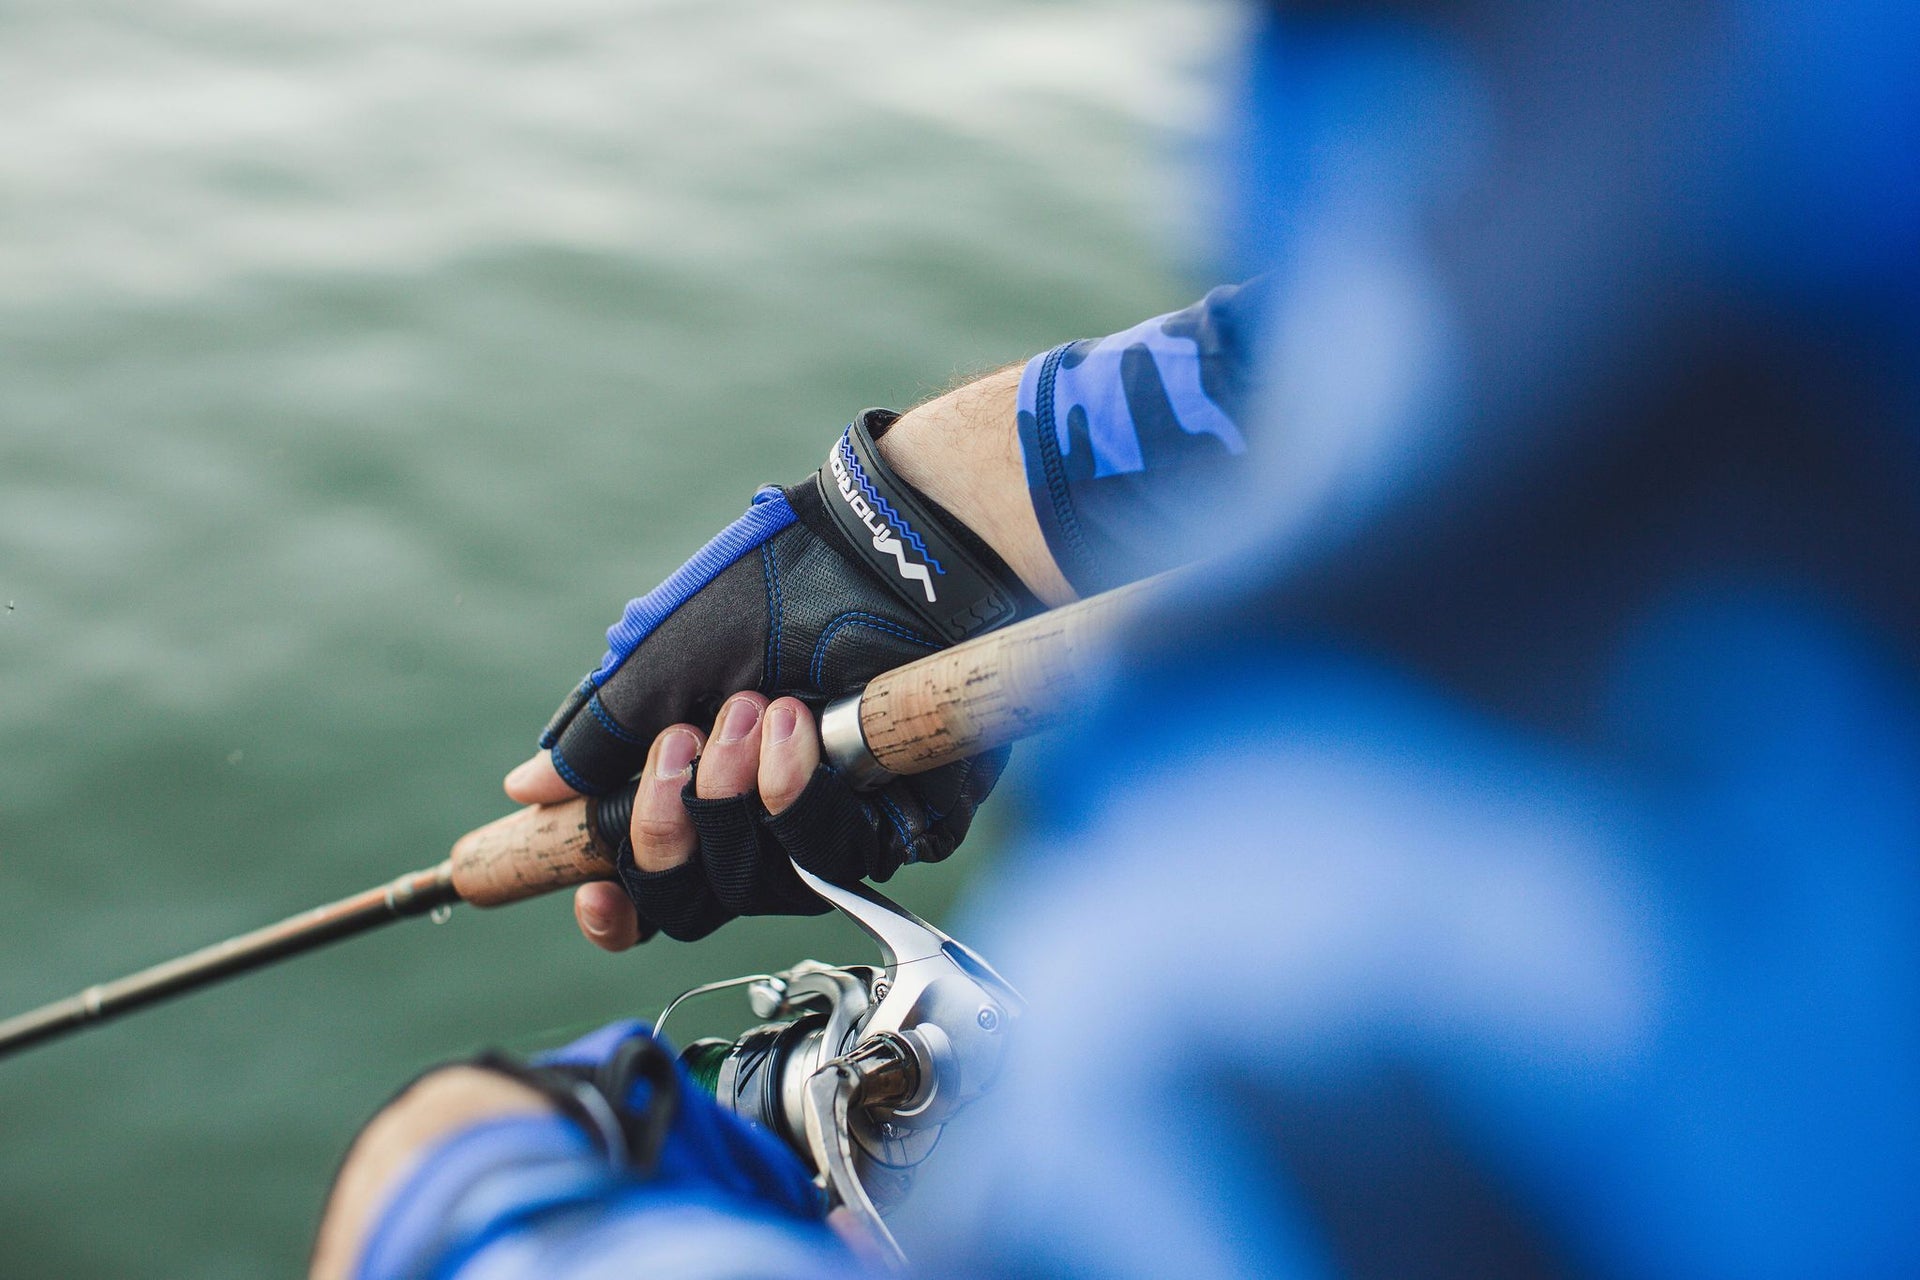 Professional Fishing Gloves Full Finger Waterproof Cut Resistant